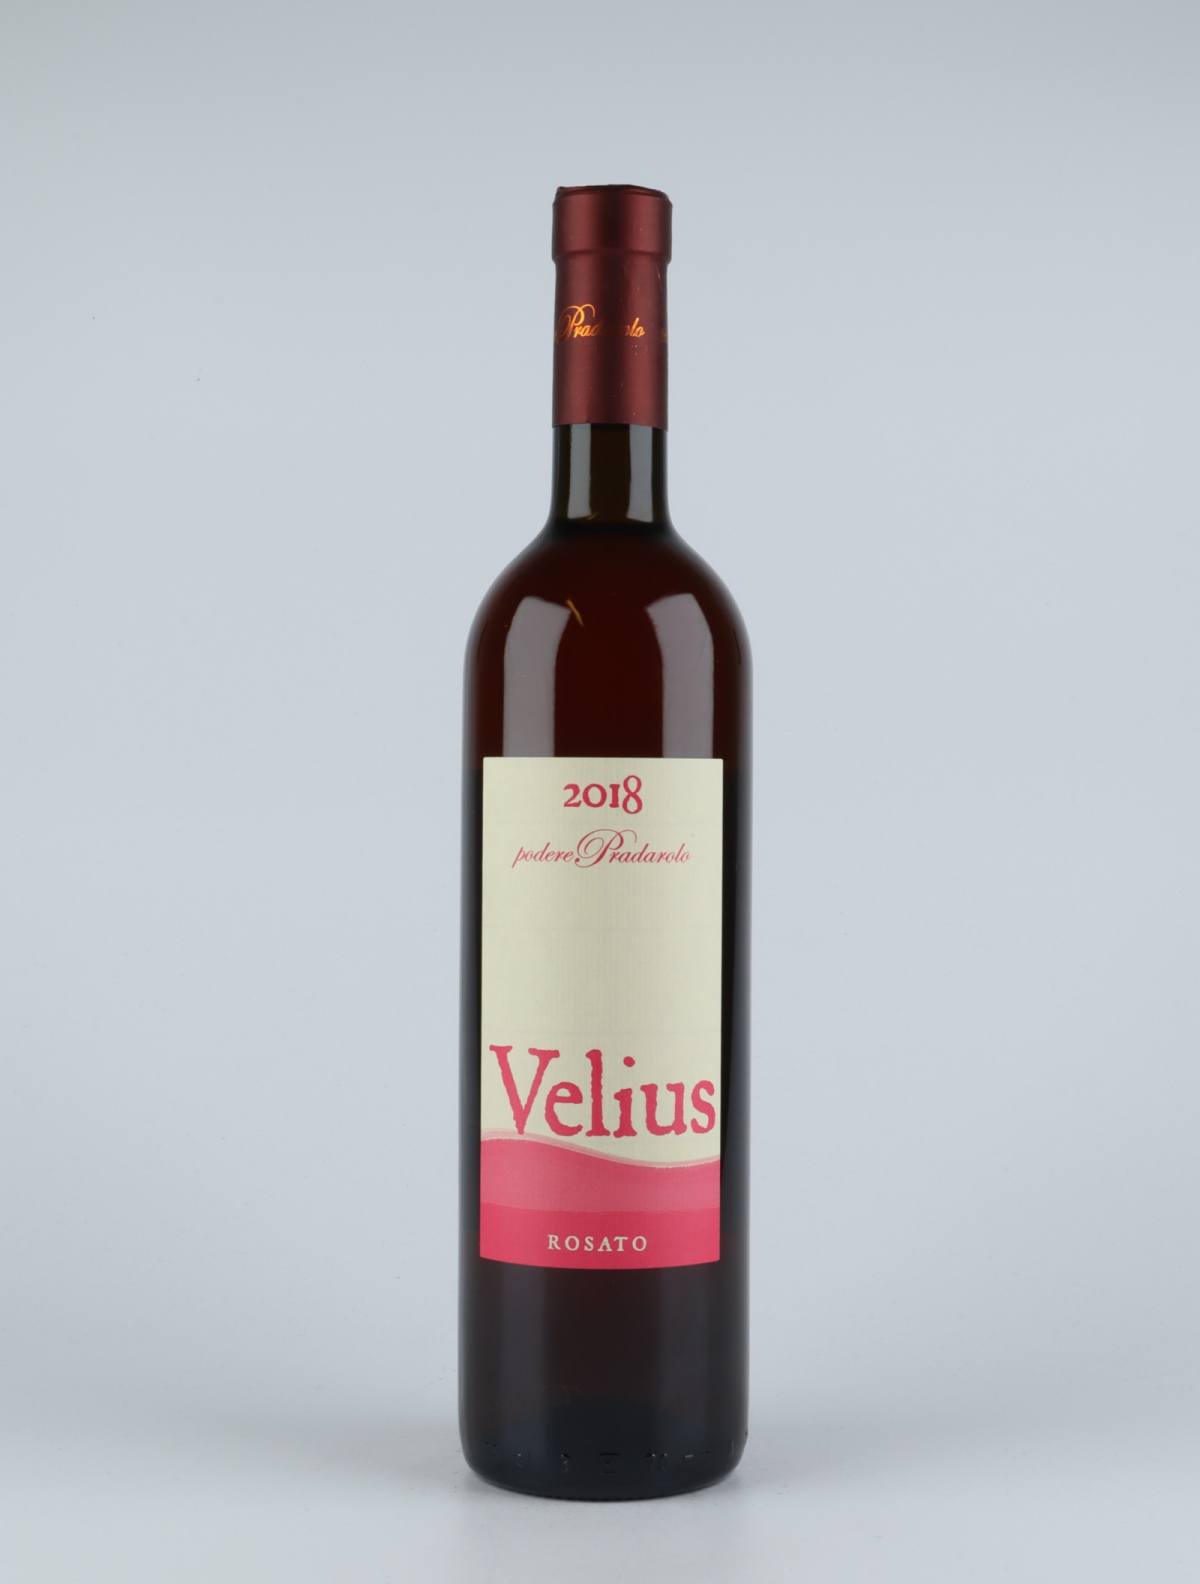 En flaske 2018 Velius Rosato Rosé fra Podere Pradarolo, Emilia-Romagna i Italien